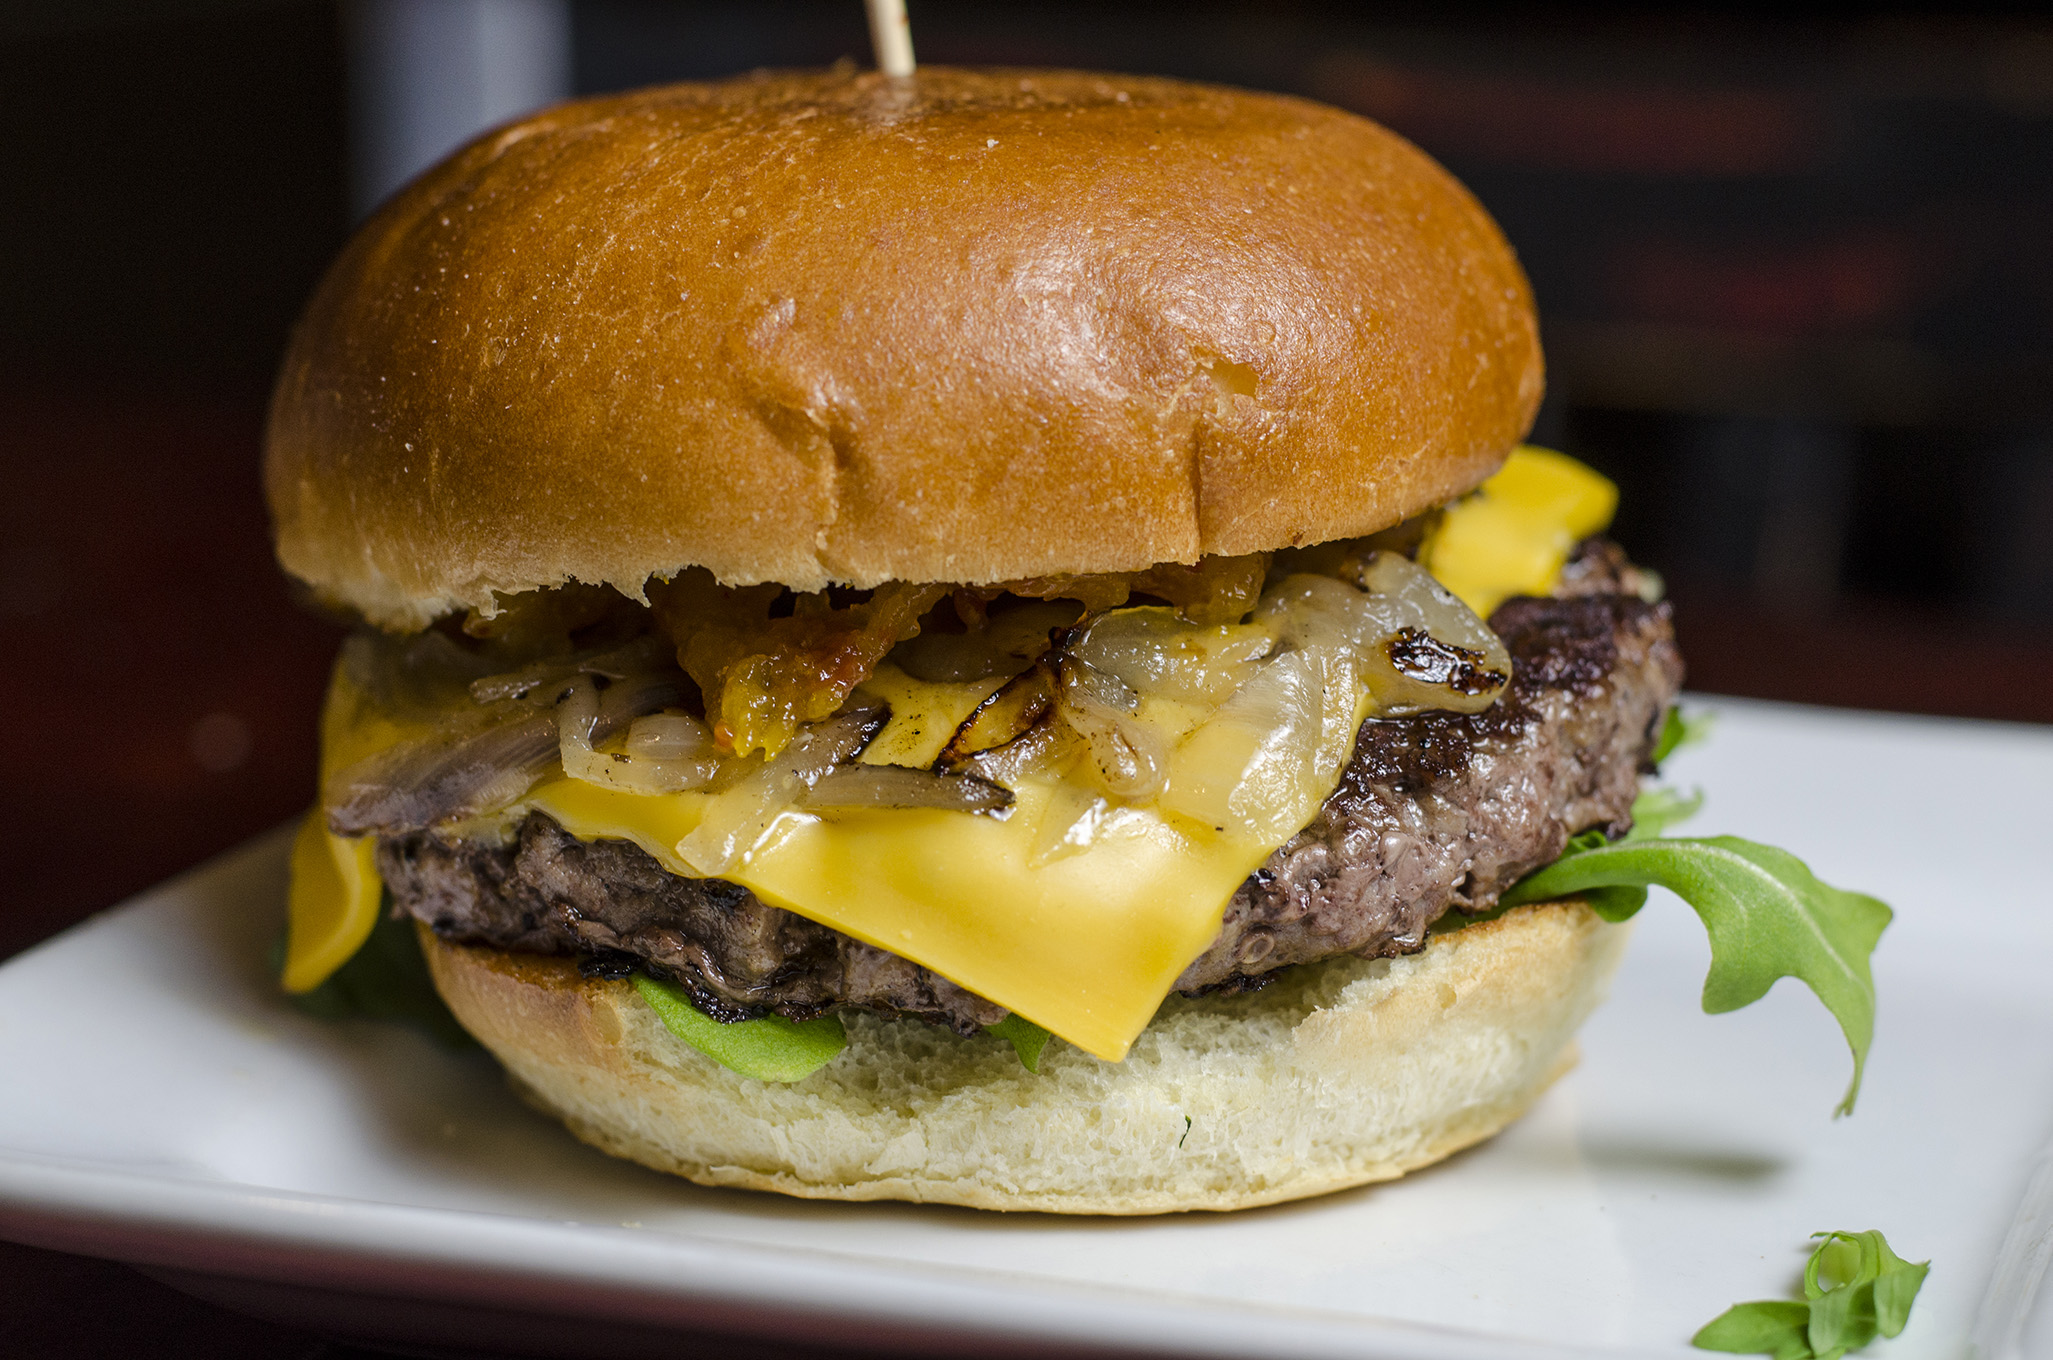 The Burger from Snackbar-B-Q in Windsor, Ontario.